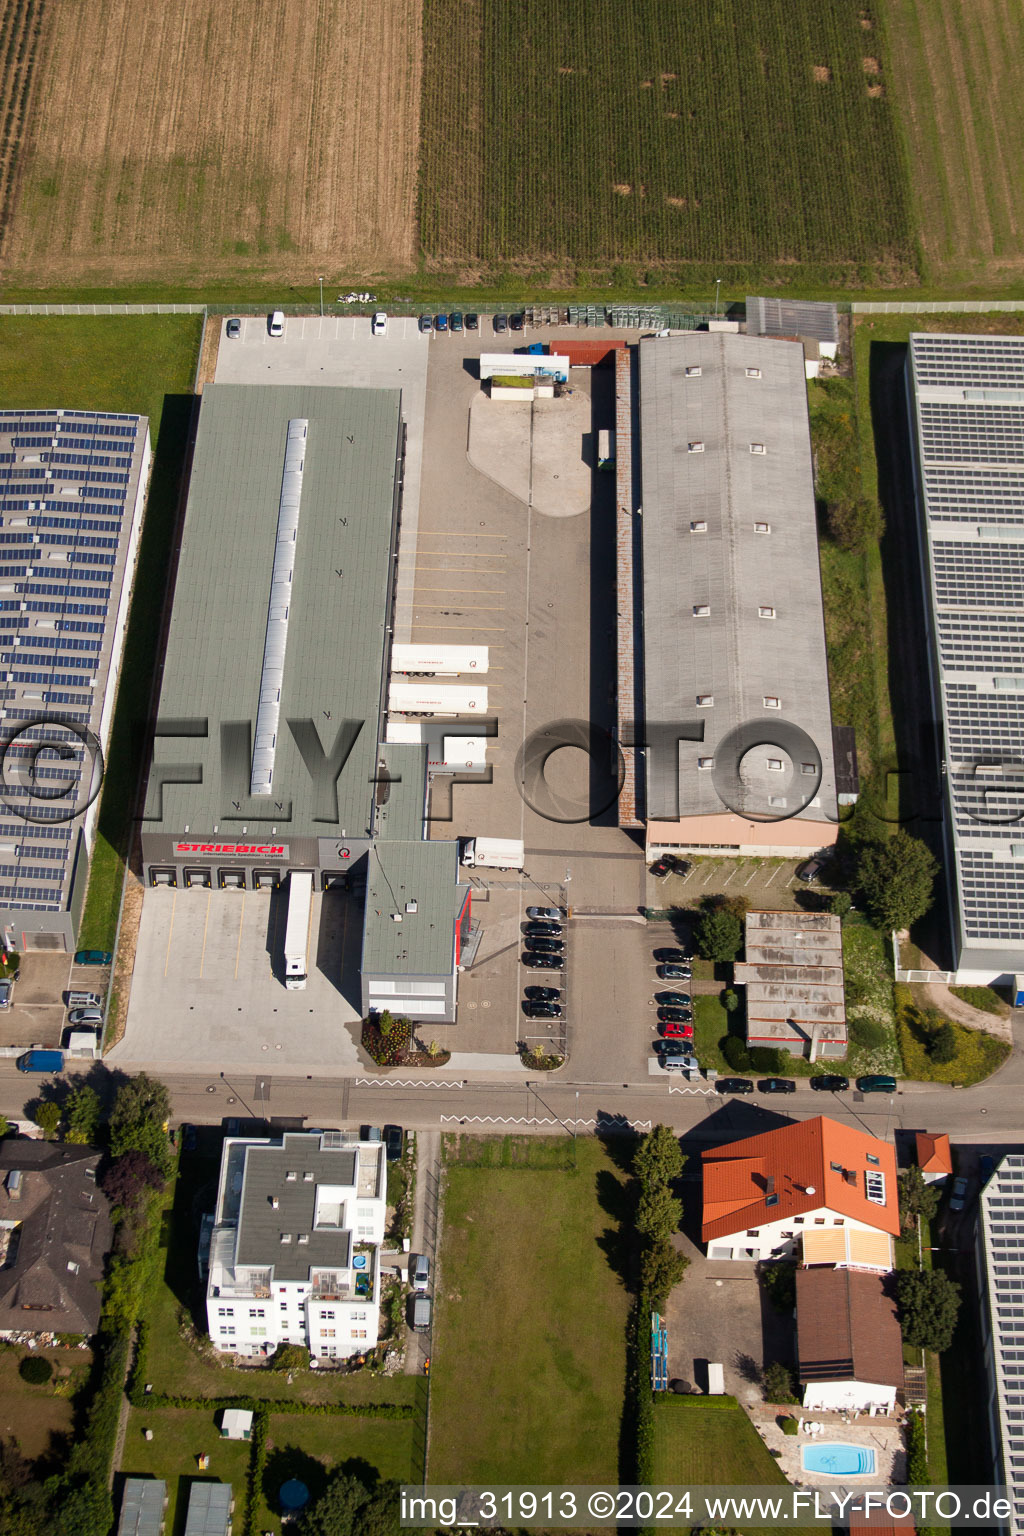 Aerial view of Schleifweg industrial area, Striebich-Logisitik in Muggensturm in the state Baden-Wuerttemberg, Germany